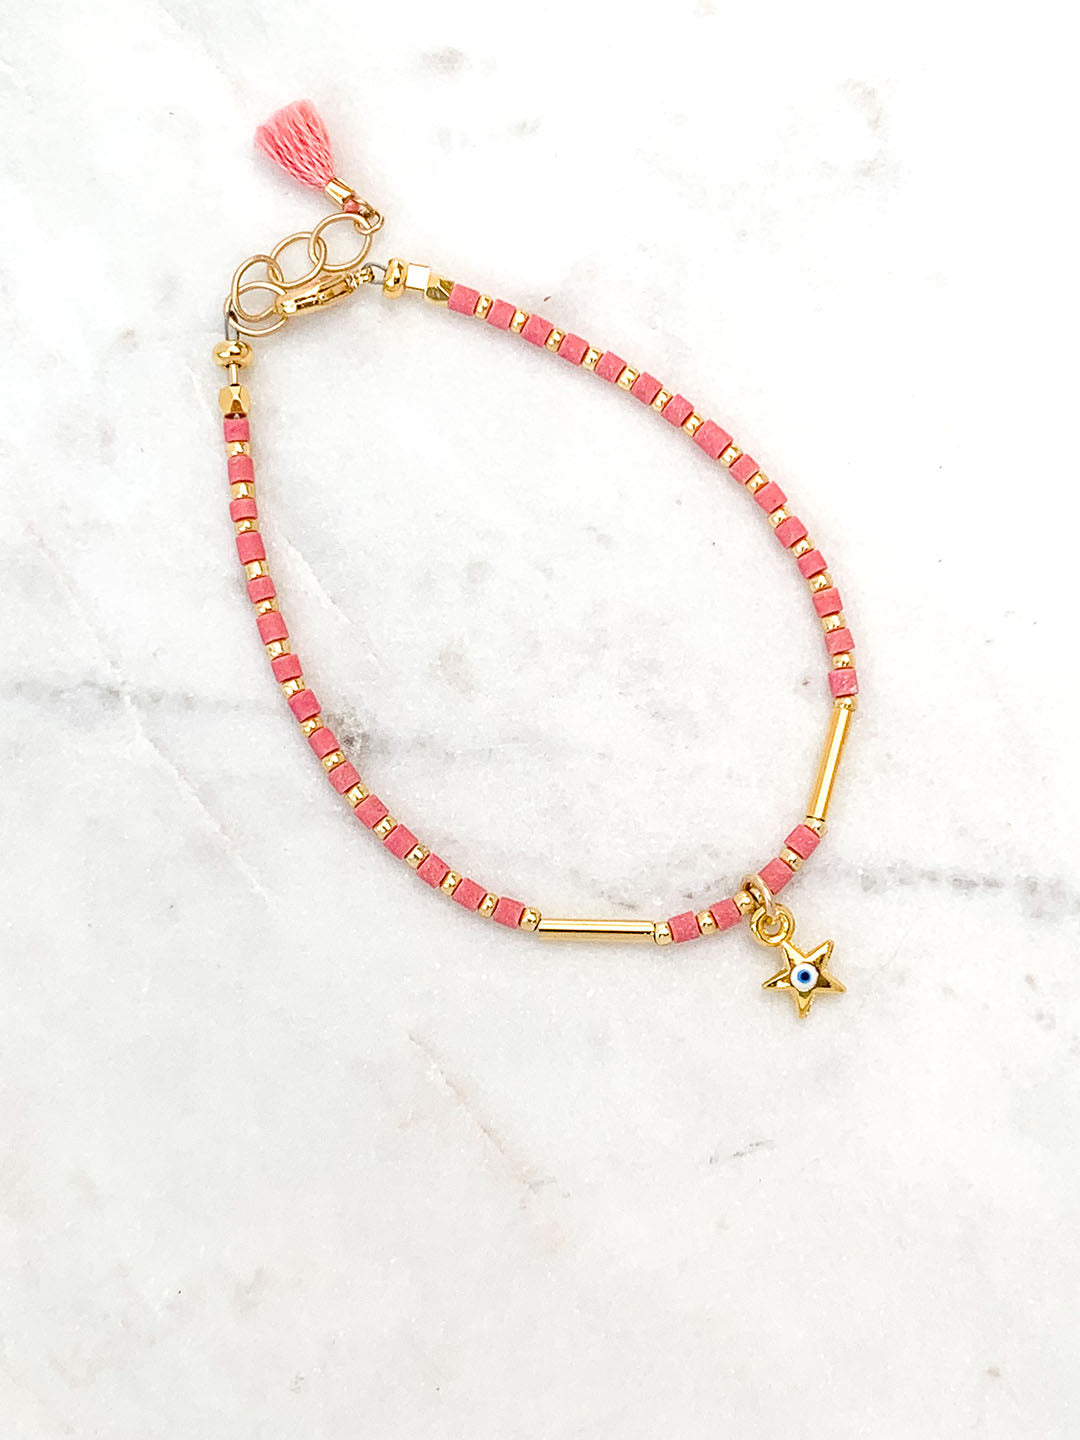 Jewelry, Pink Evil Eye Gold Star Charm Bracelet